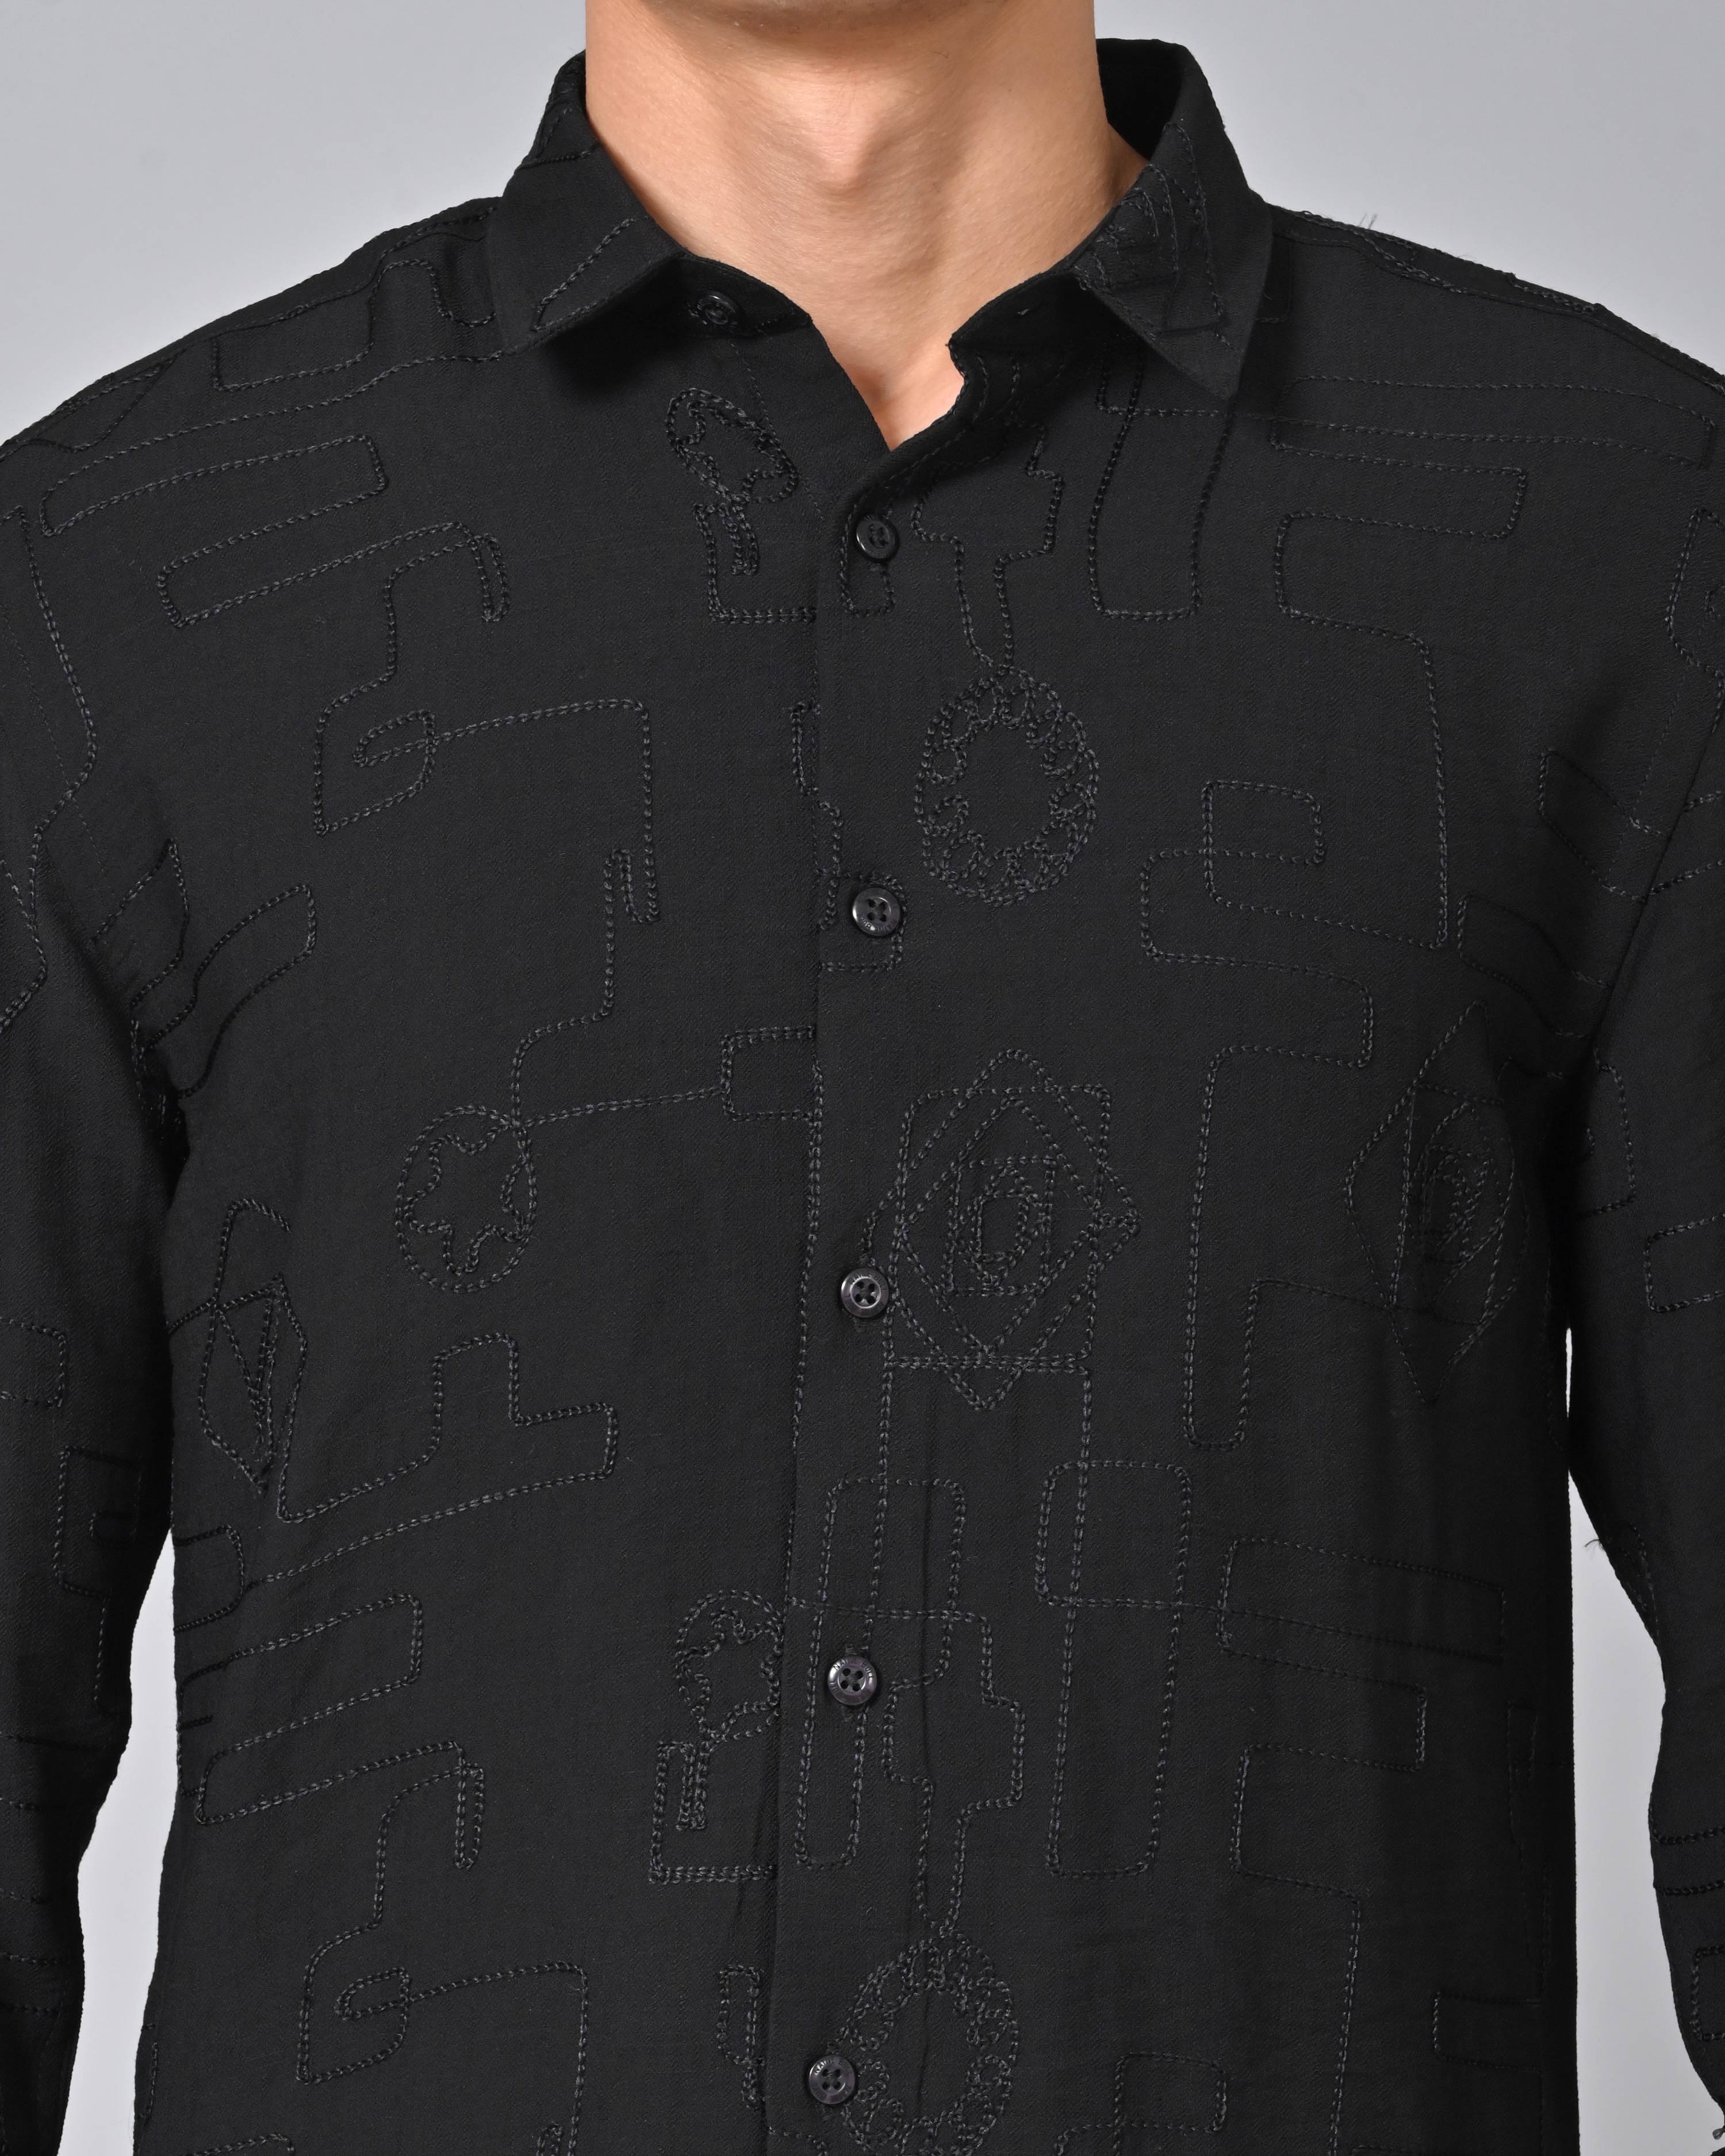 Shop Men's Embroidered Black Full Sleeve Shirt Online